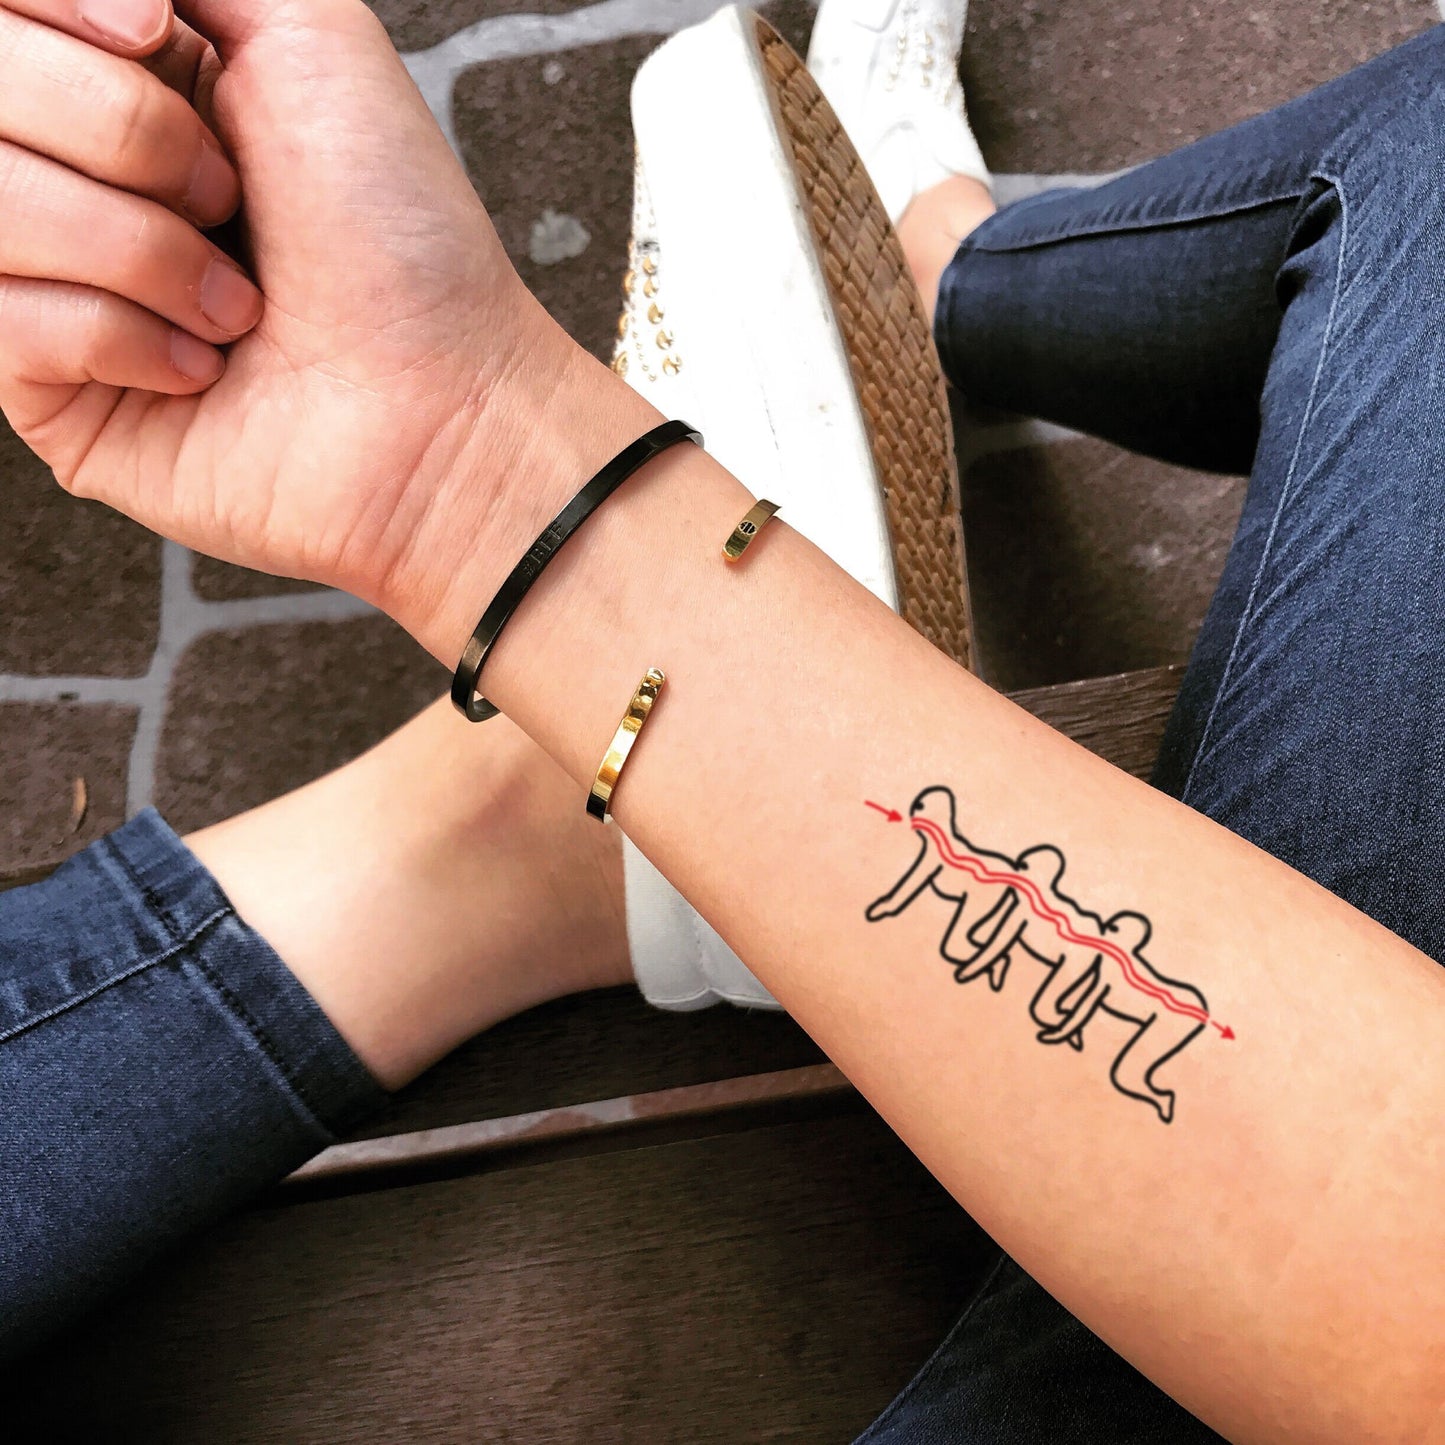 fake medium human centipede minimalist temporary tattoo sticker design idea on forearm